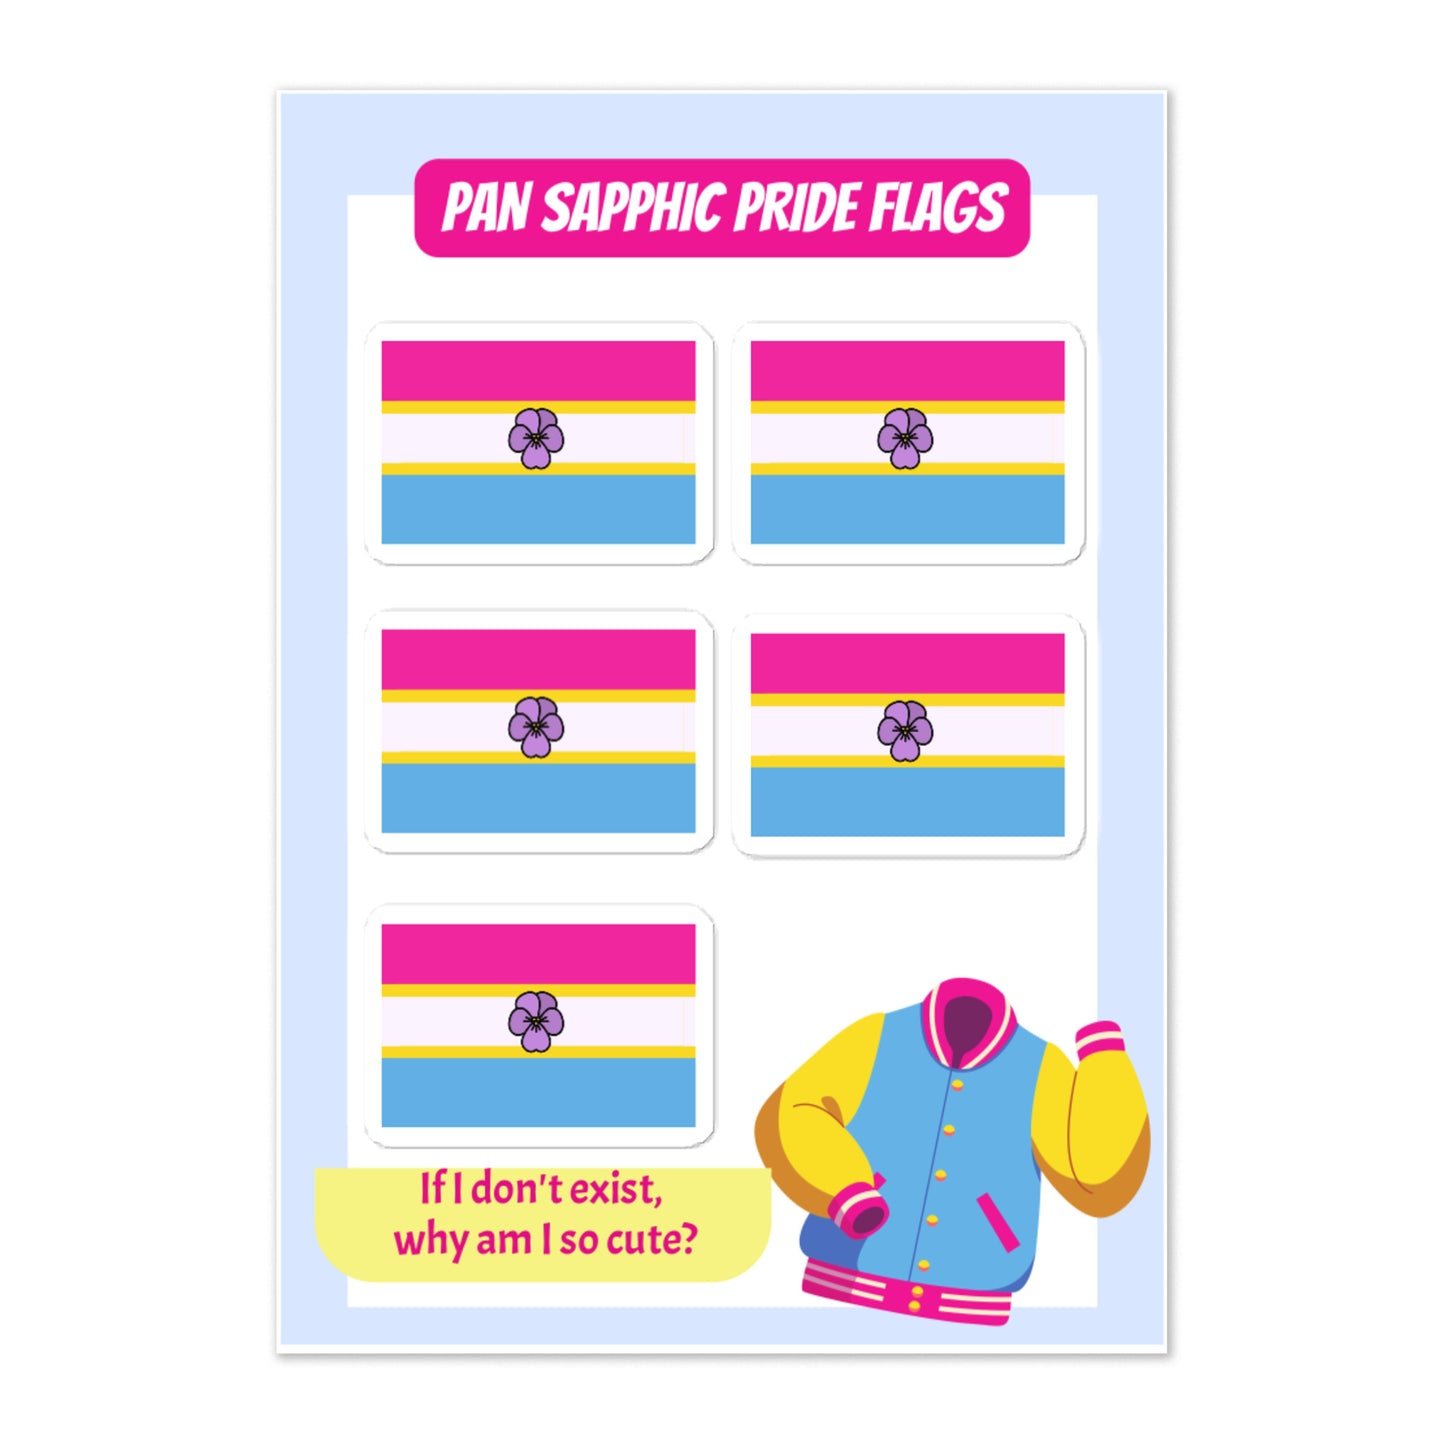 Pan Sapphic Pride Flags